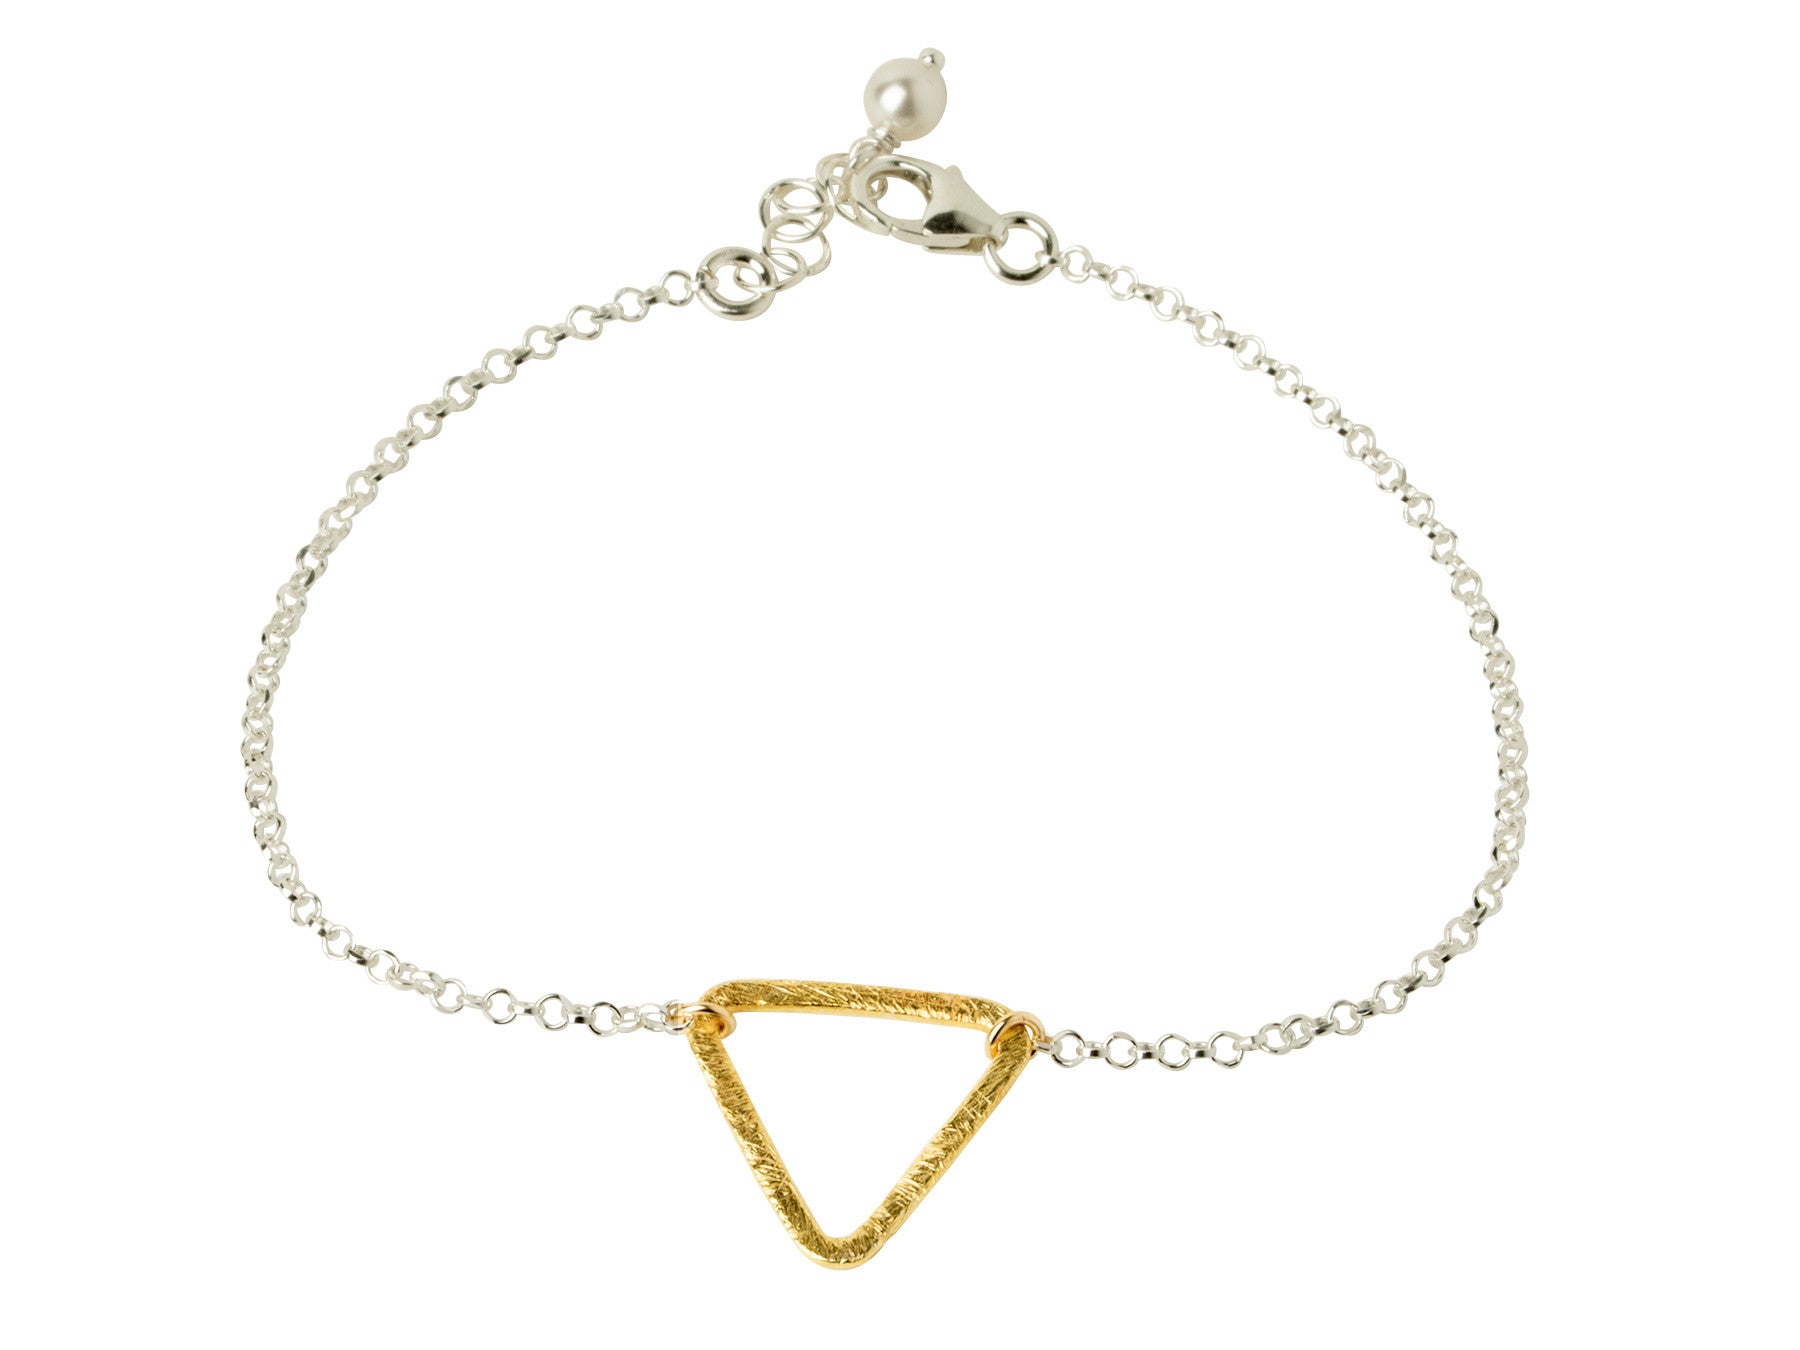 Trendy Silver Triangle Bracelet - Pura Vida Bracelets - Shop Now! - Bellaboo